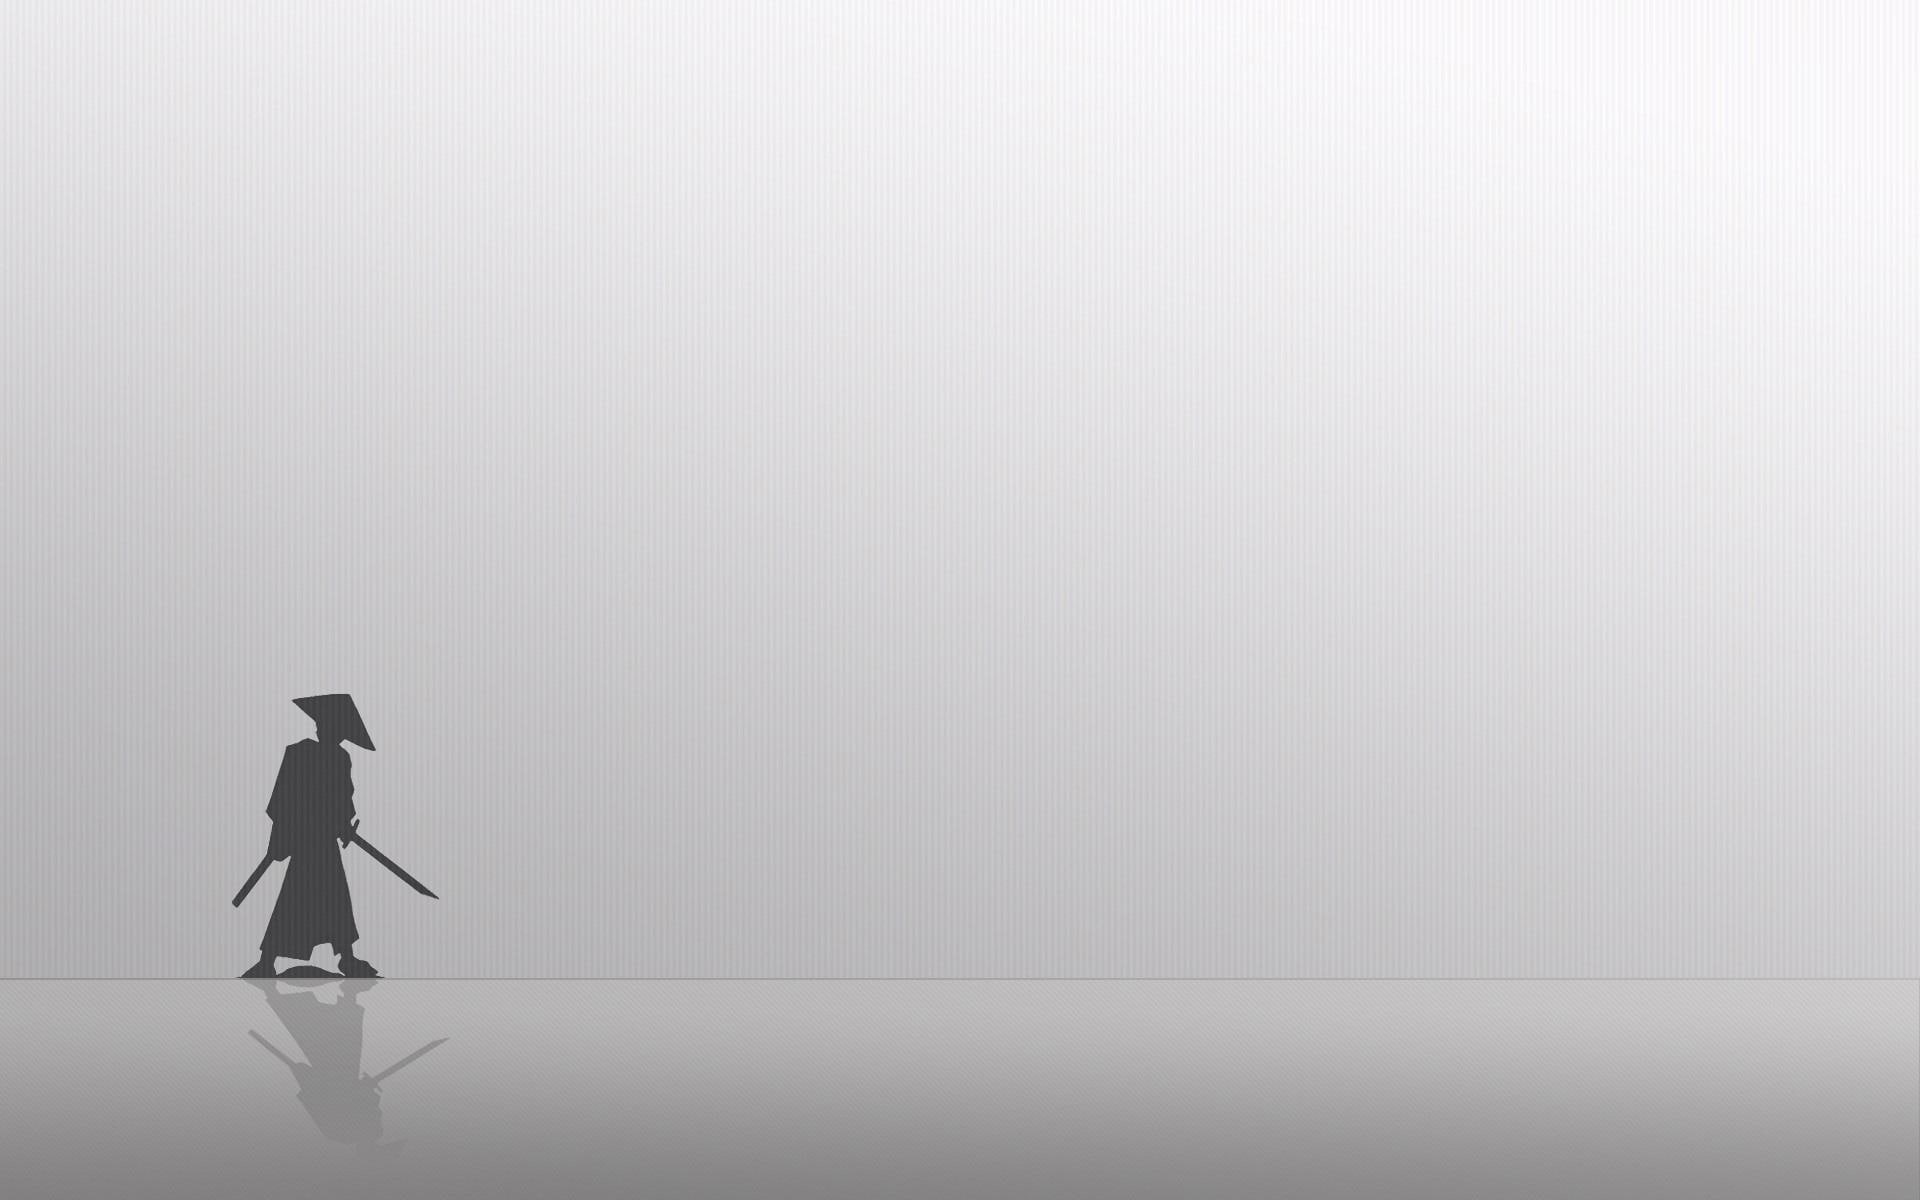 Samurai silhouette, silhouette of human wearing hat, minimalistic